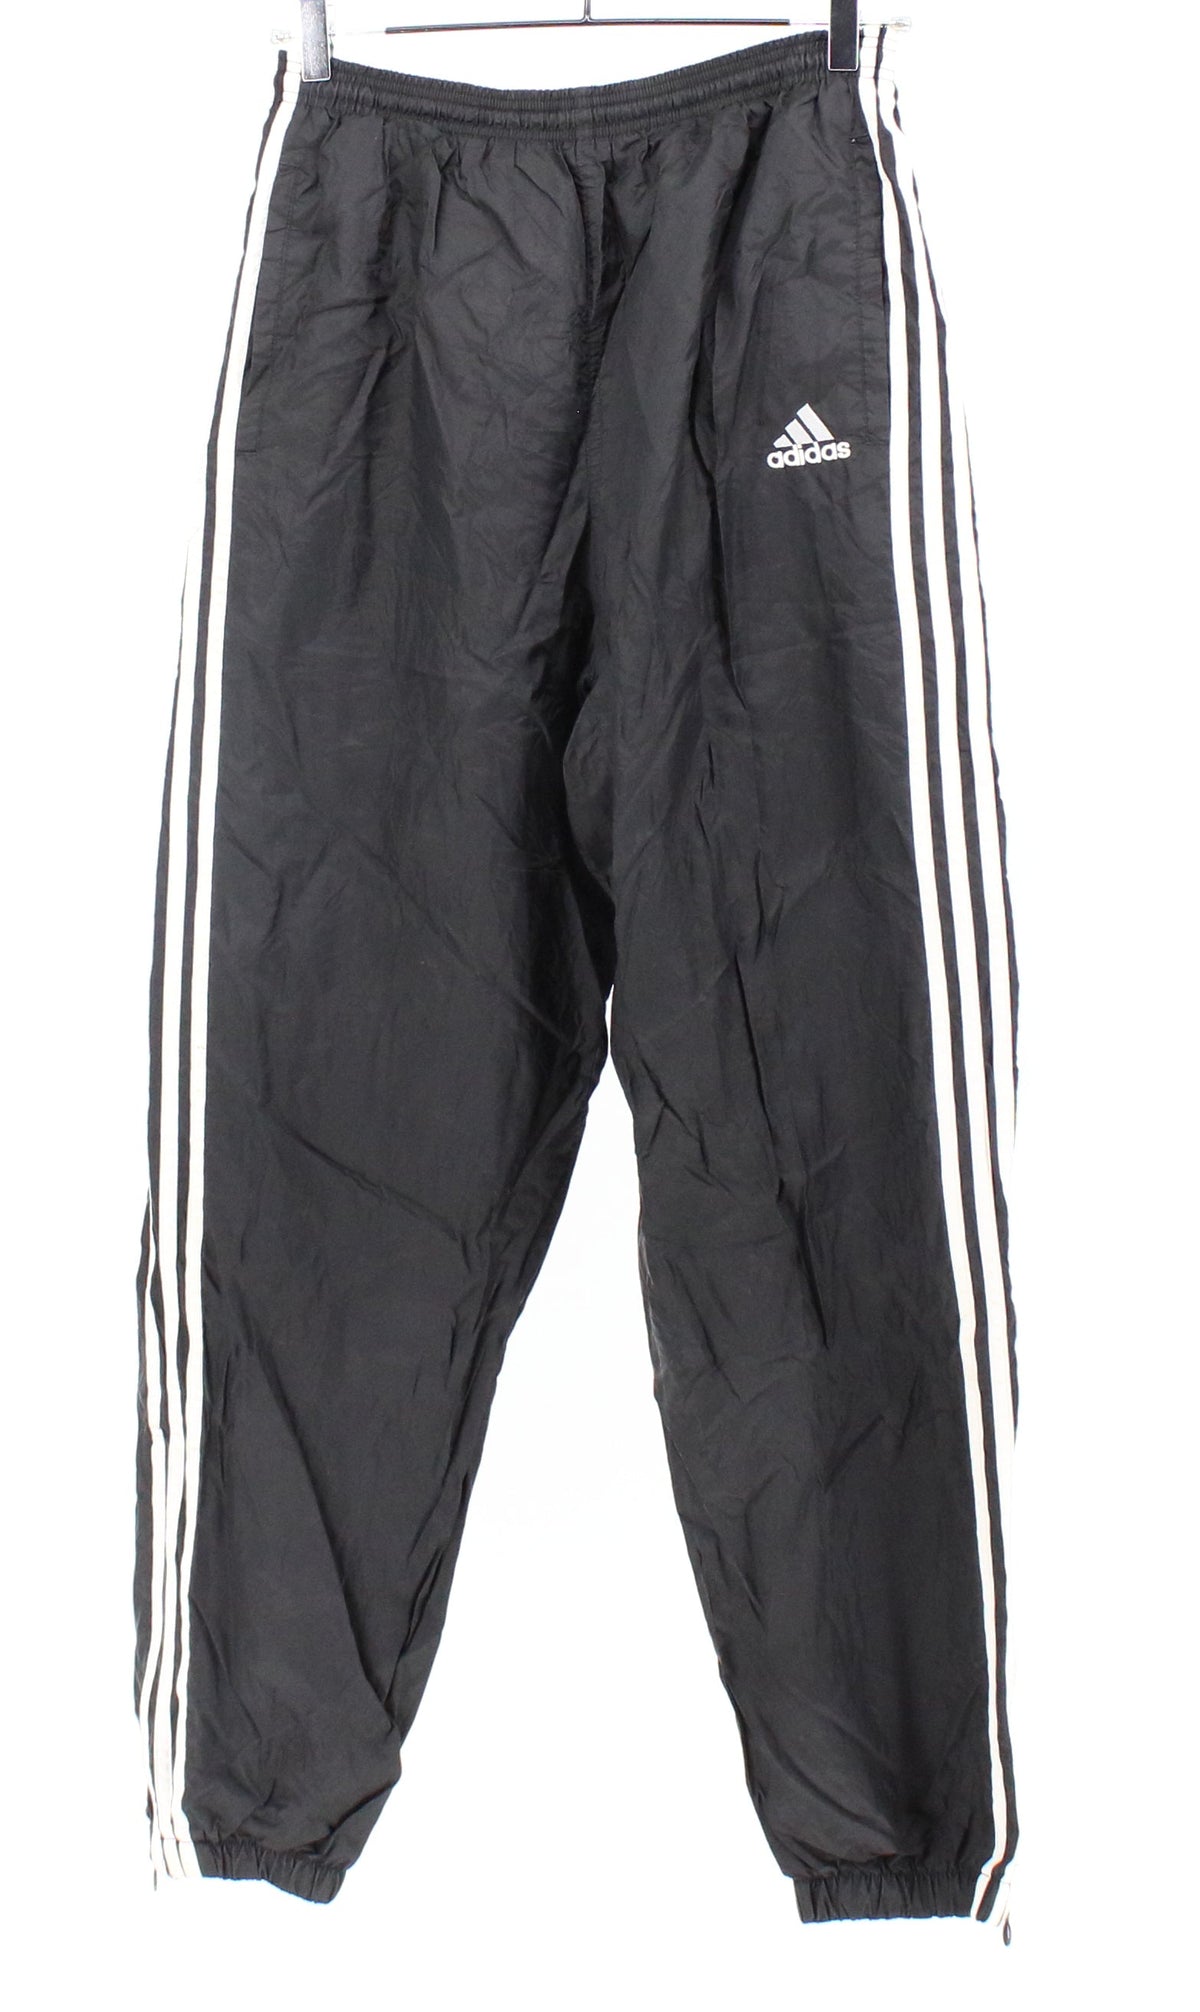 Adidas Black Track Pants With Hem Zipper